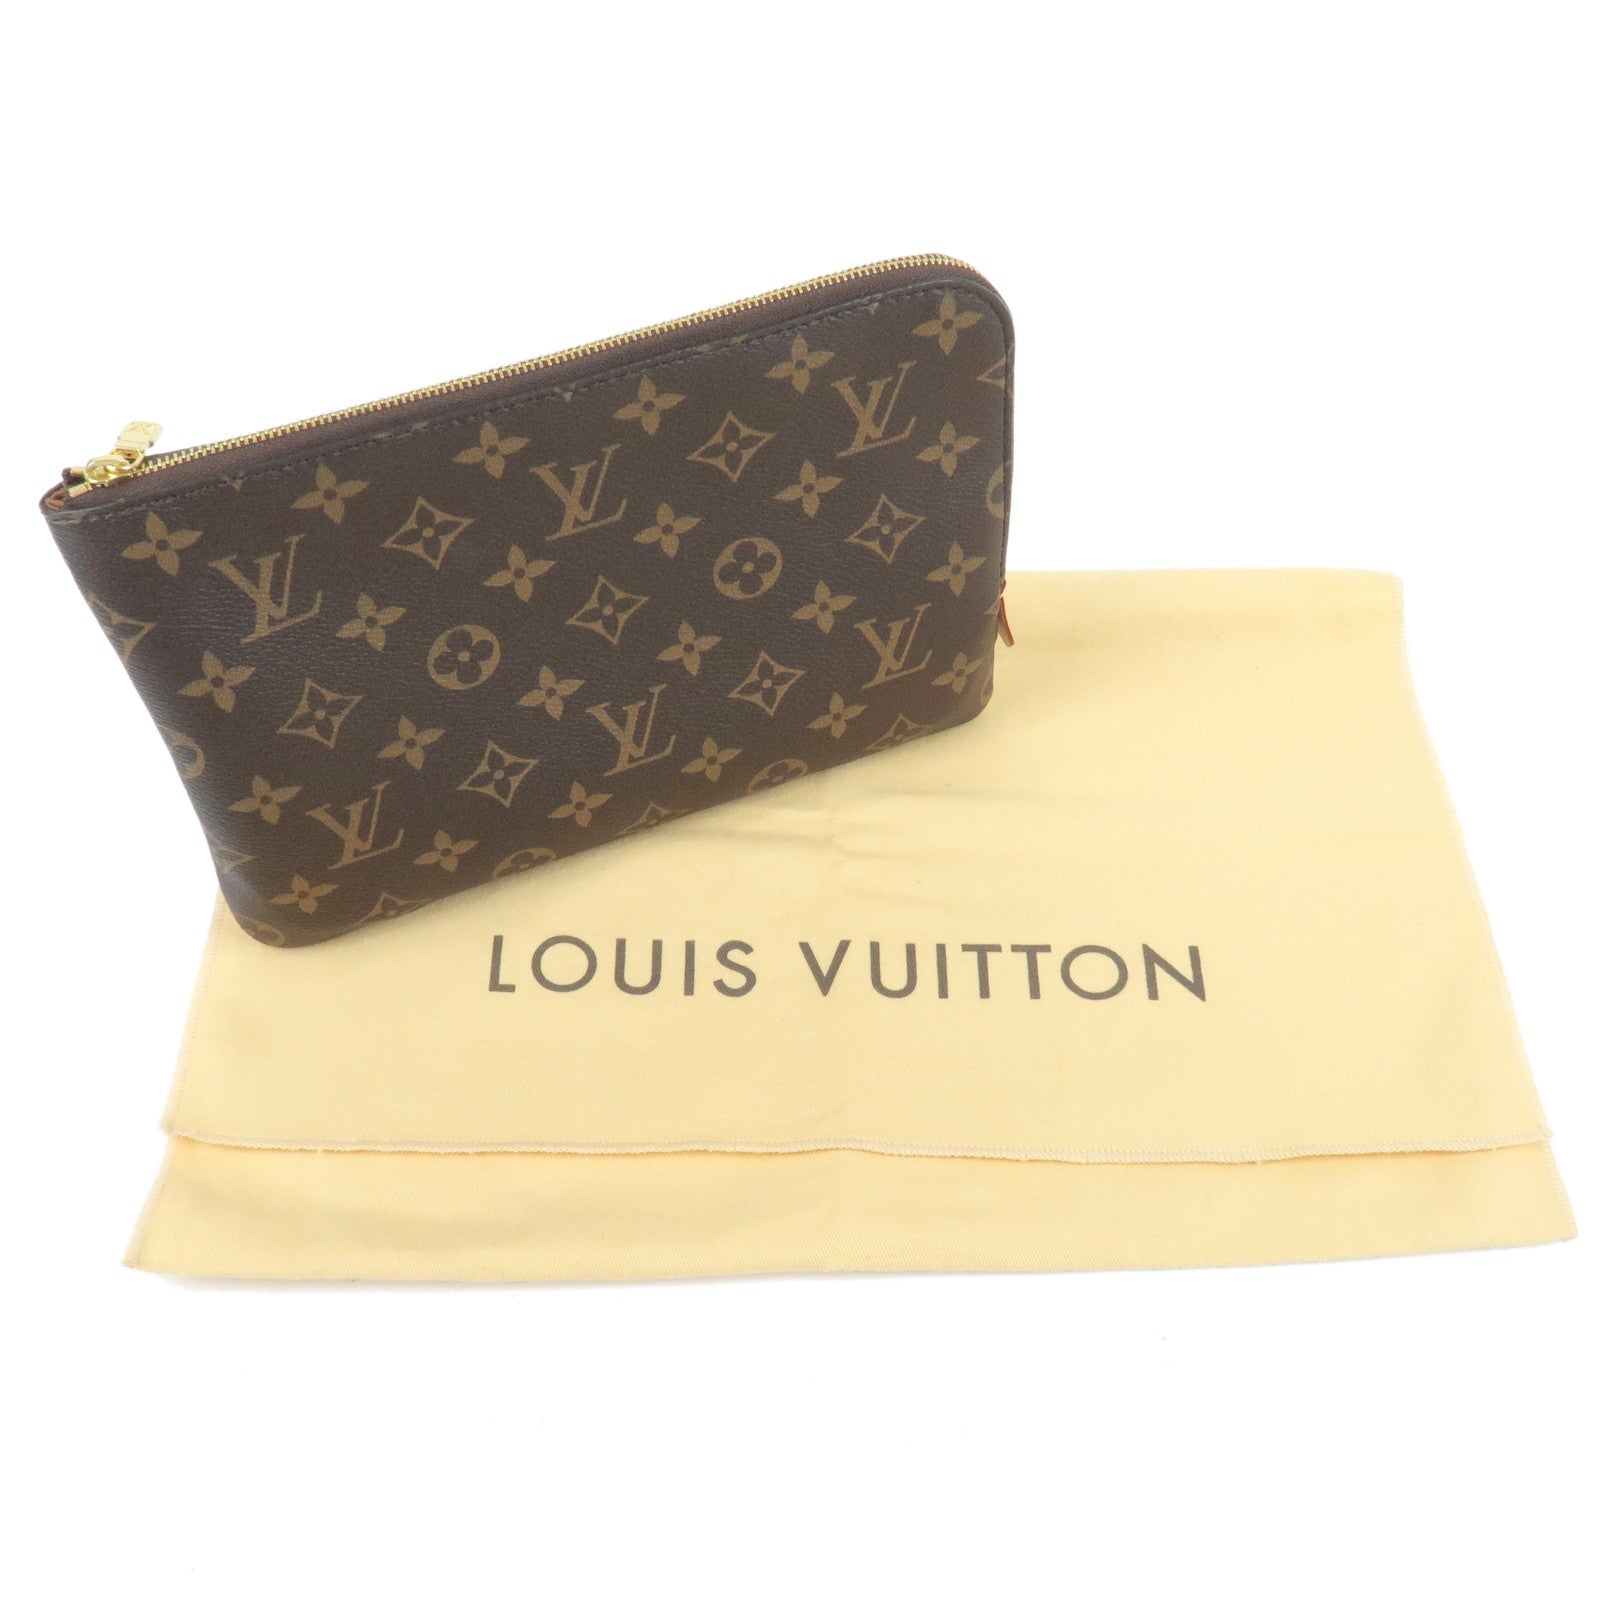 What Fits Inside The Louis Vuitton Etui Voyage Pouch 